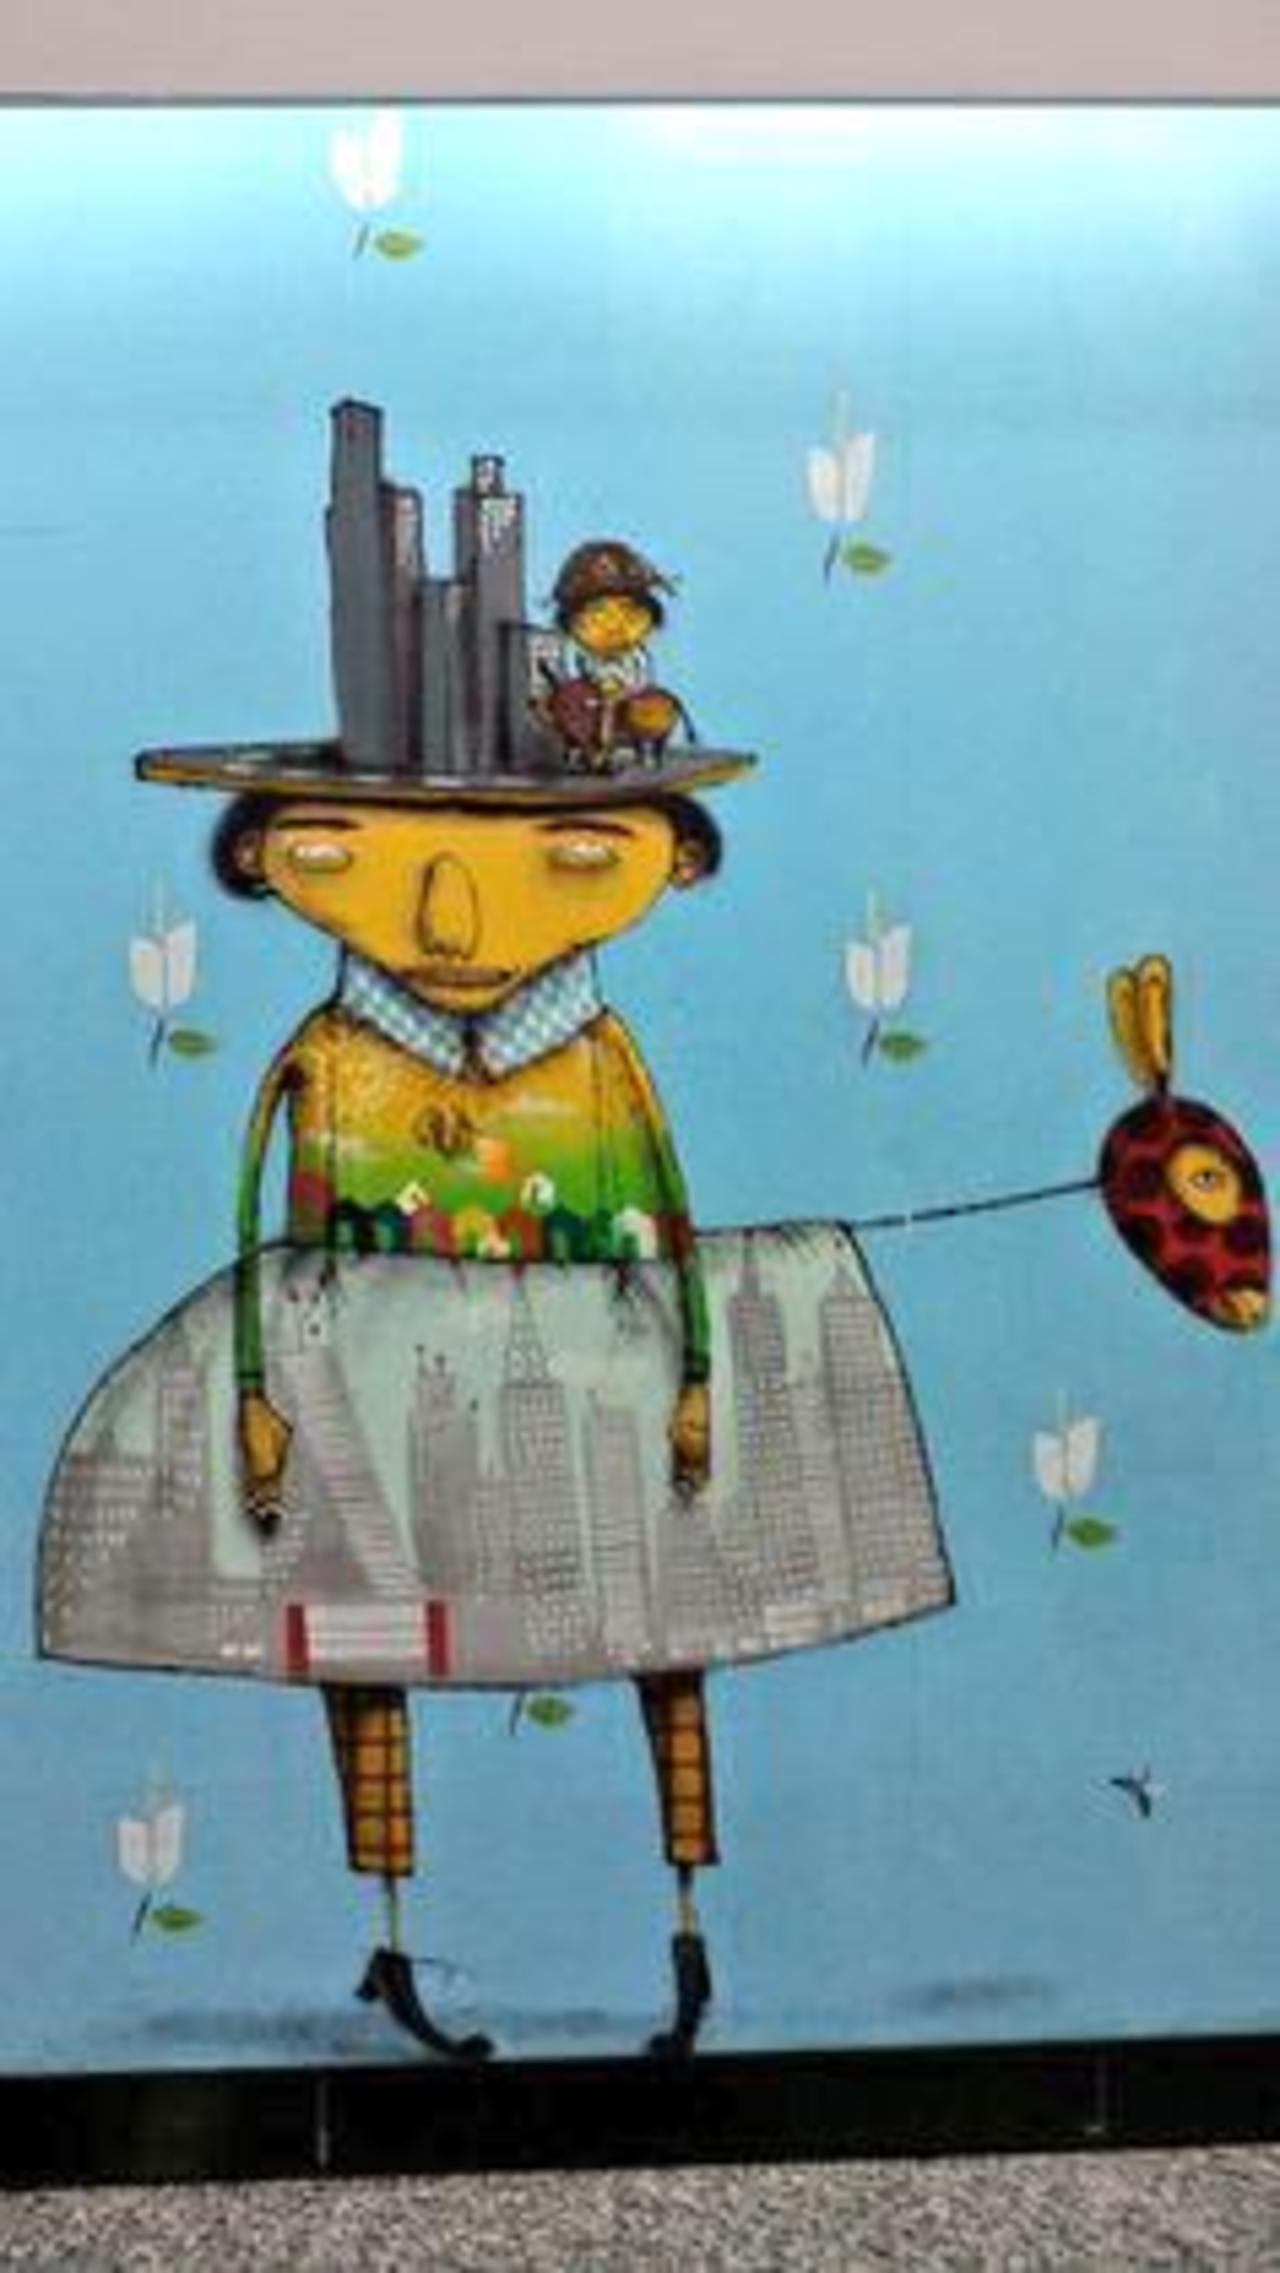 “@Pitchuskita: Os Gemeos 
Sao Paulo, Brazil
#StreetArt #art #graffiti #UrbanArt http://t.co/0Geqzr6w5y”